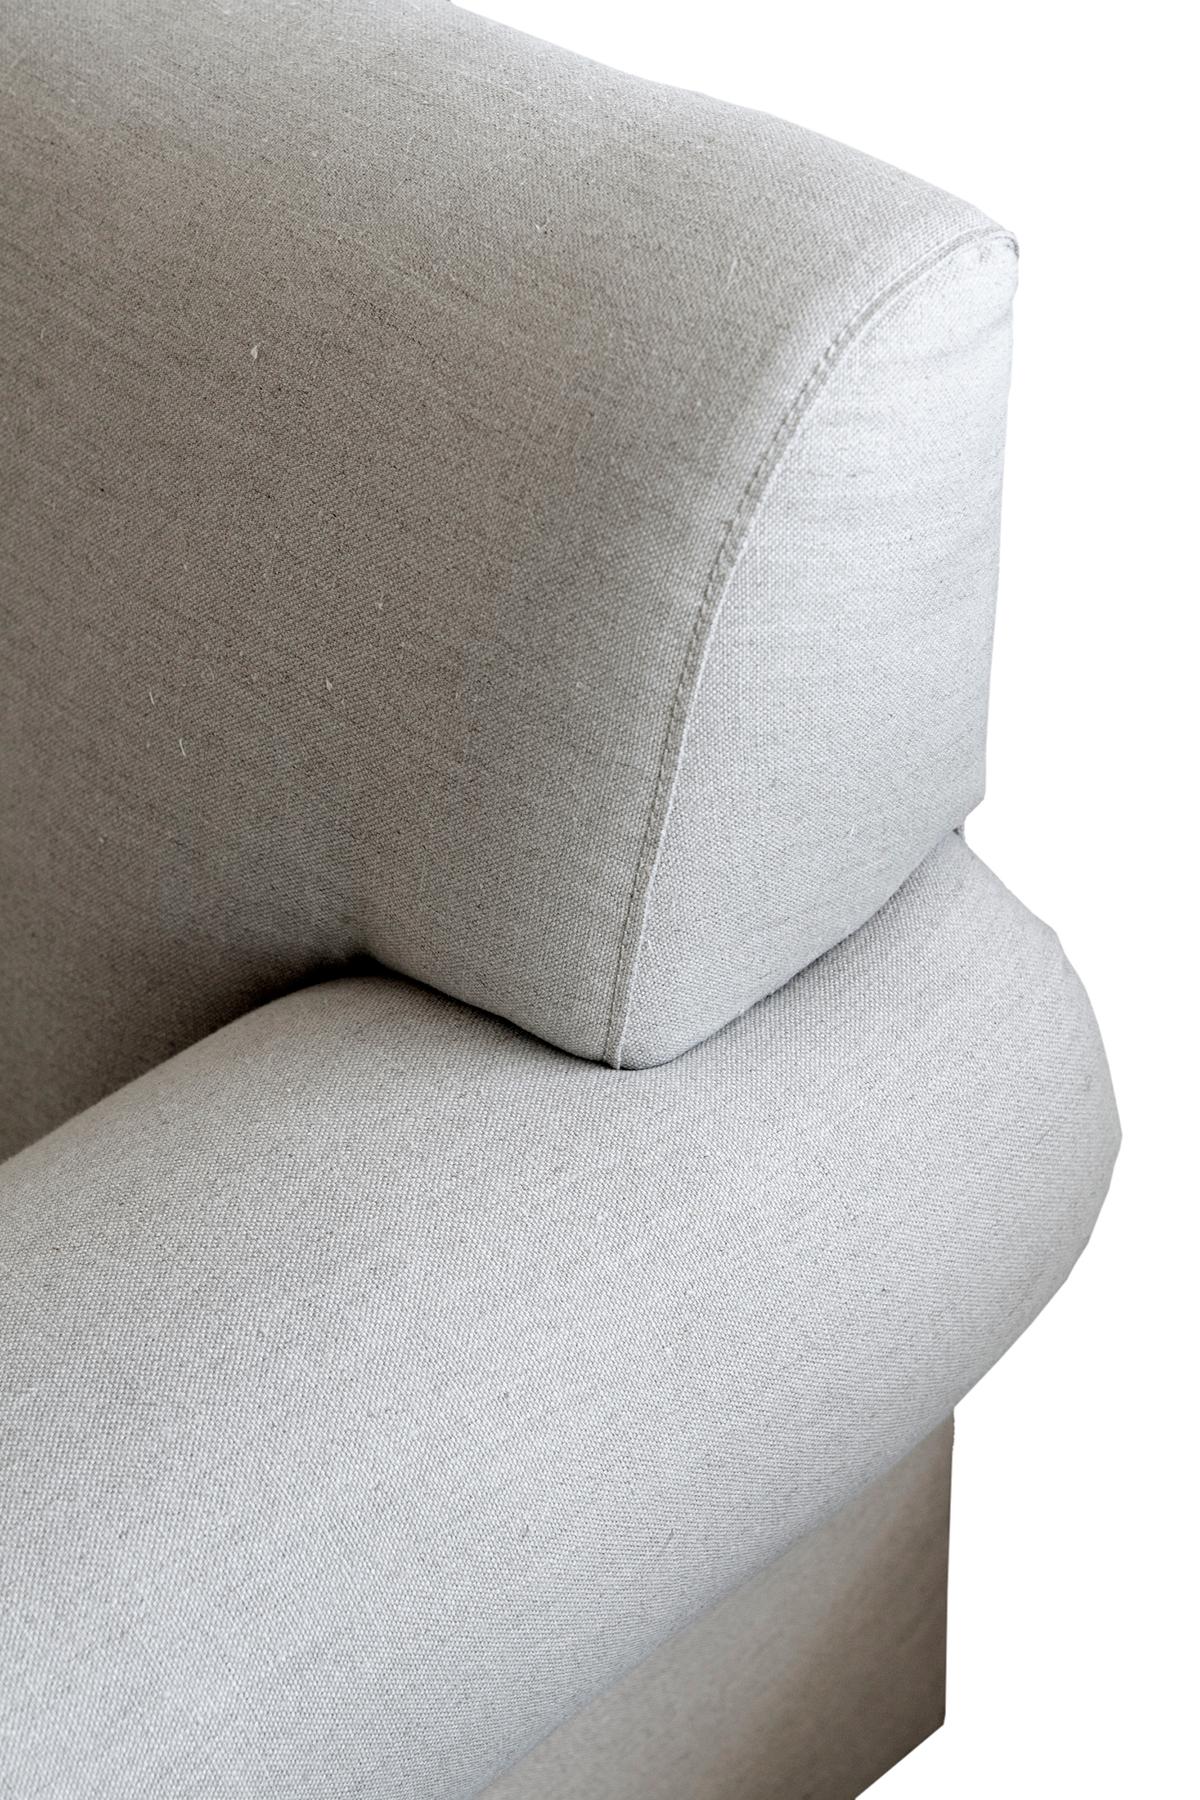 Linen Sofa For Sale 1